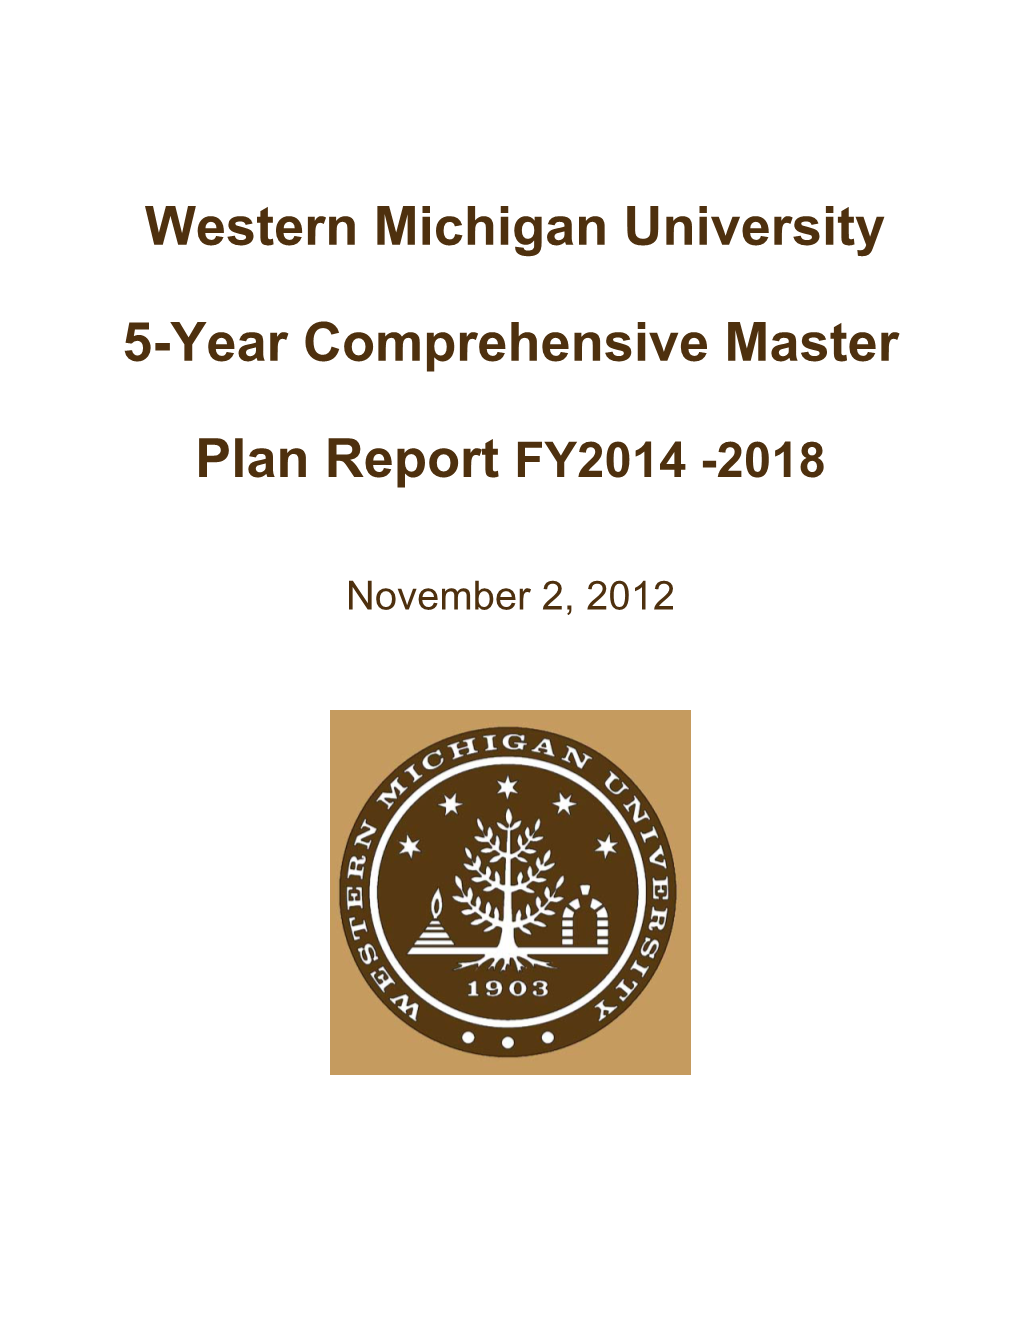 Western Michigan University 5-Year Comprehensive Master Plan Report